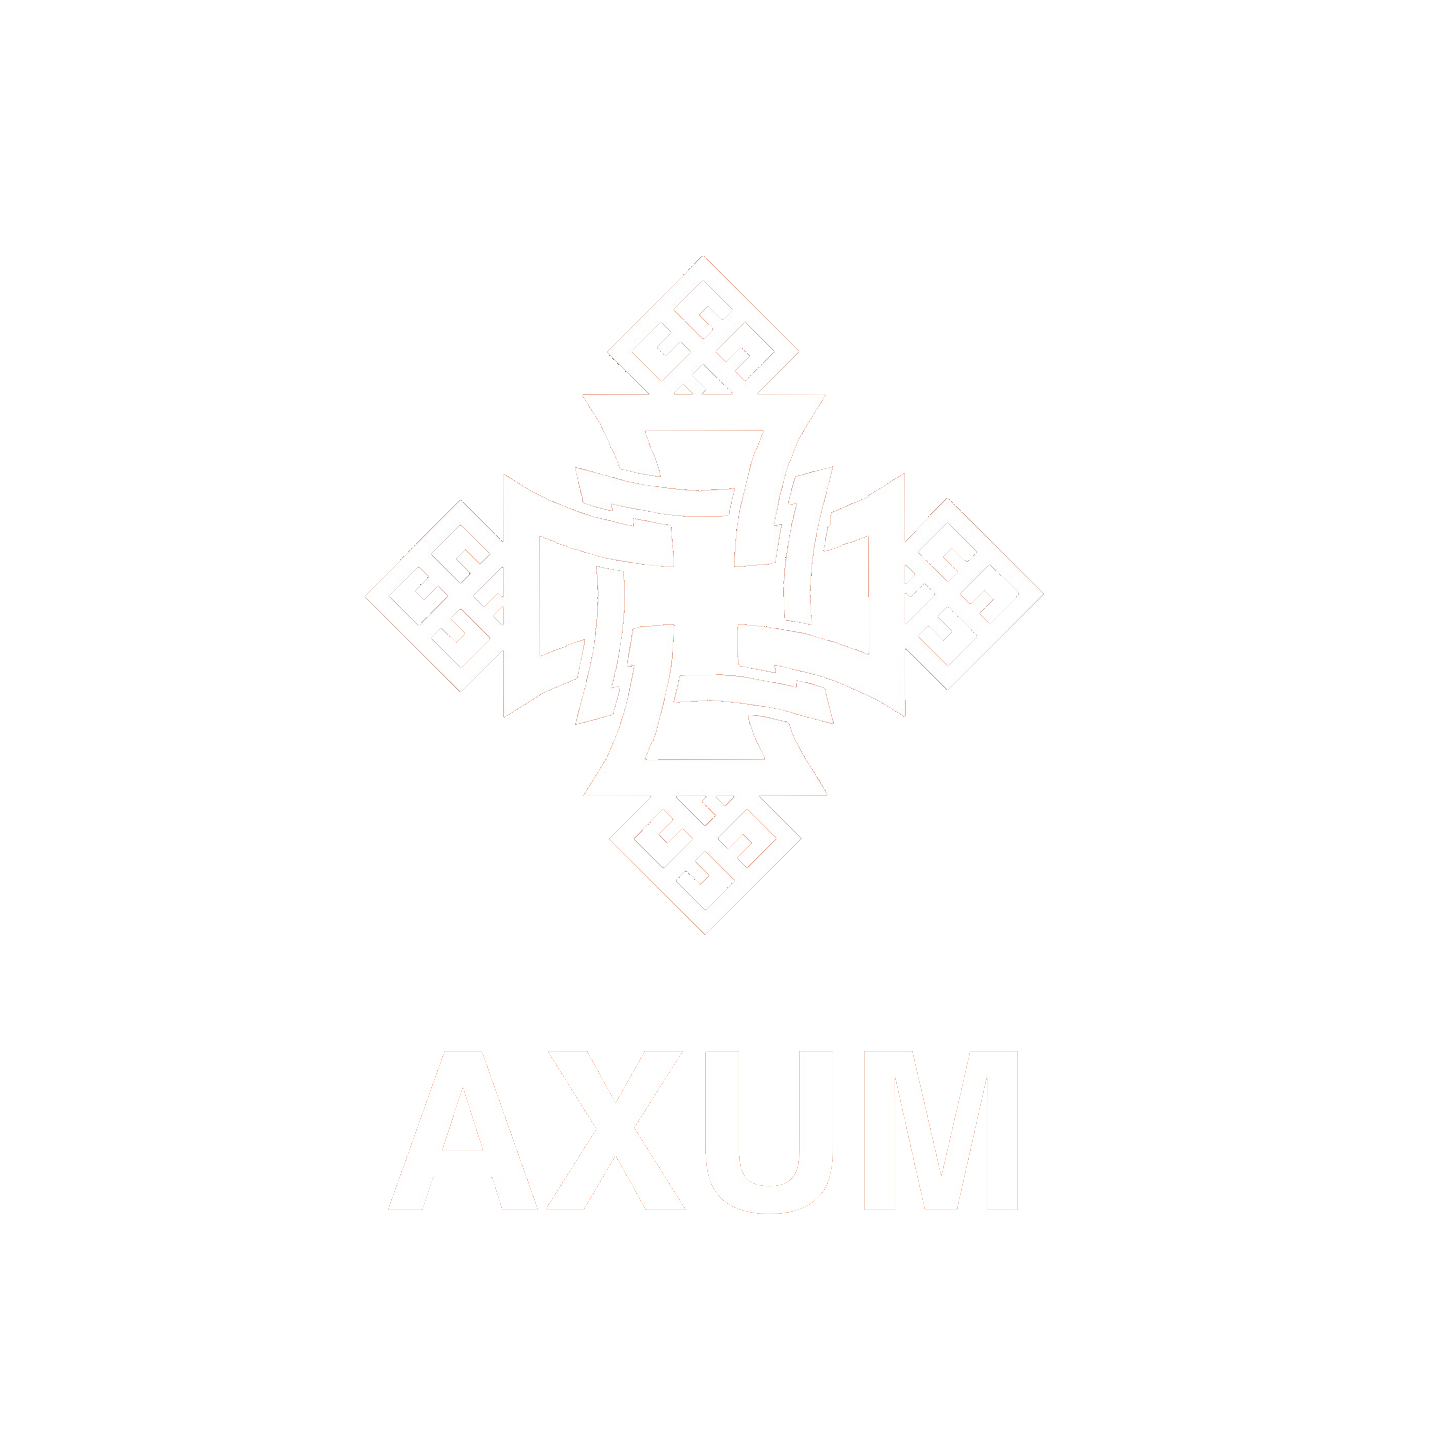 AXUM